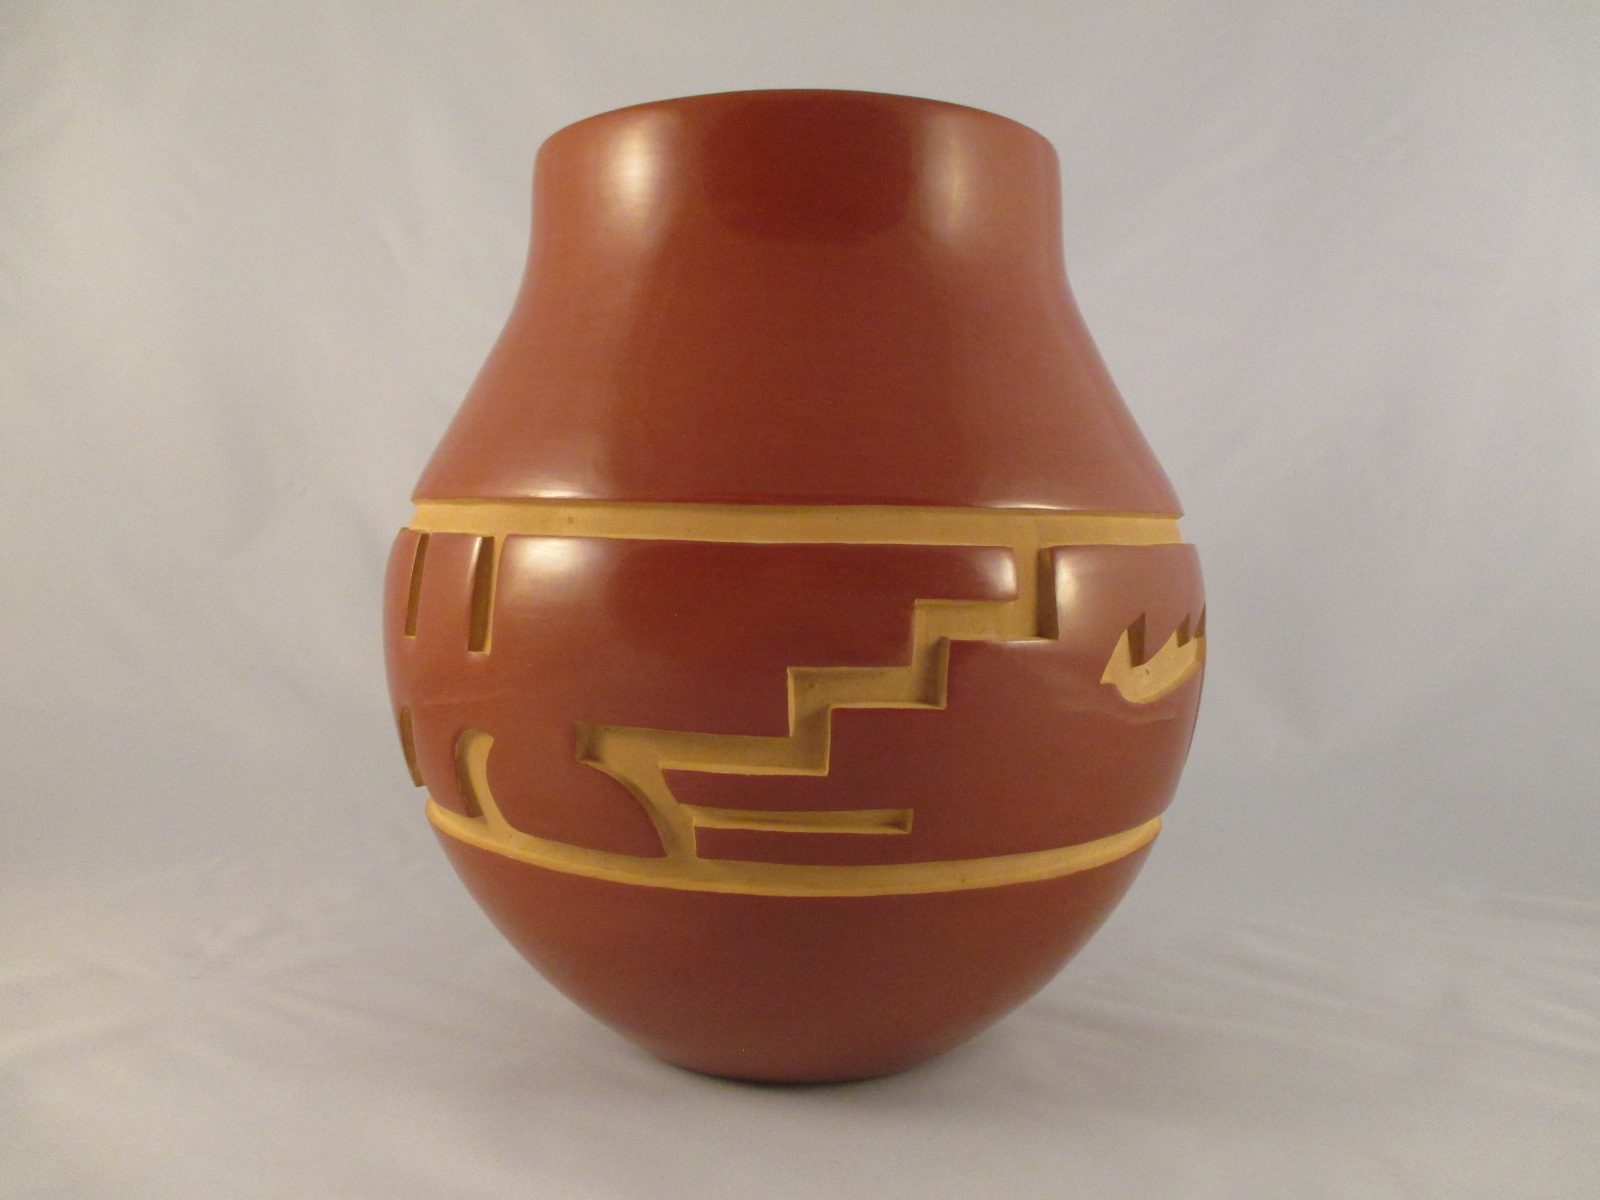 Native American Pottery - Carved Red Jar by Santa Clara Pueblo Indian pottery artist, LuAnn Tafoya $4,950-